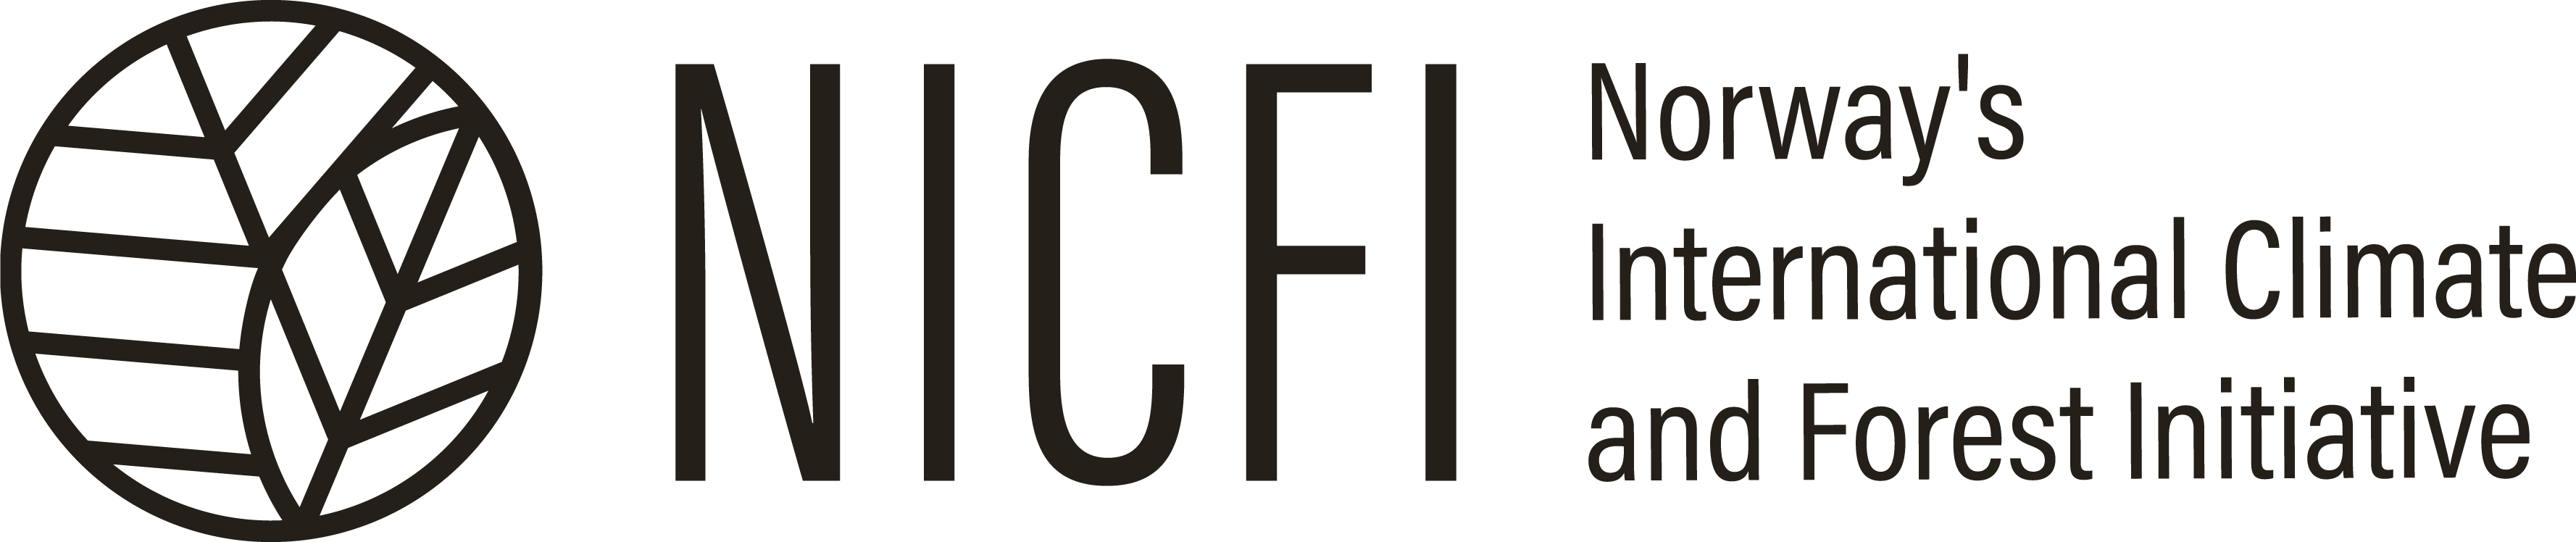 nicfi-logo-acronym-text-right-eps